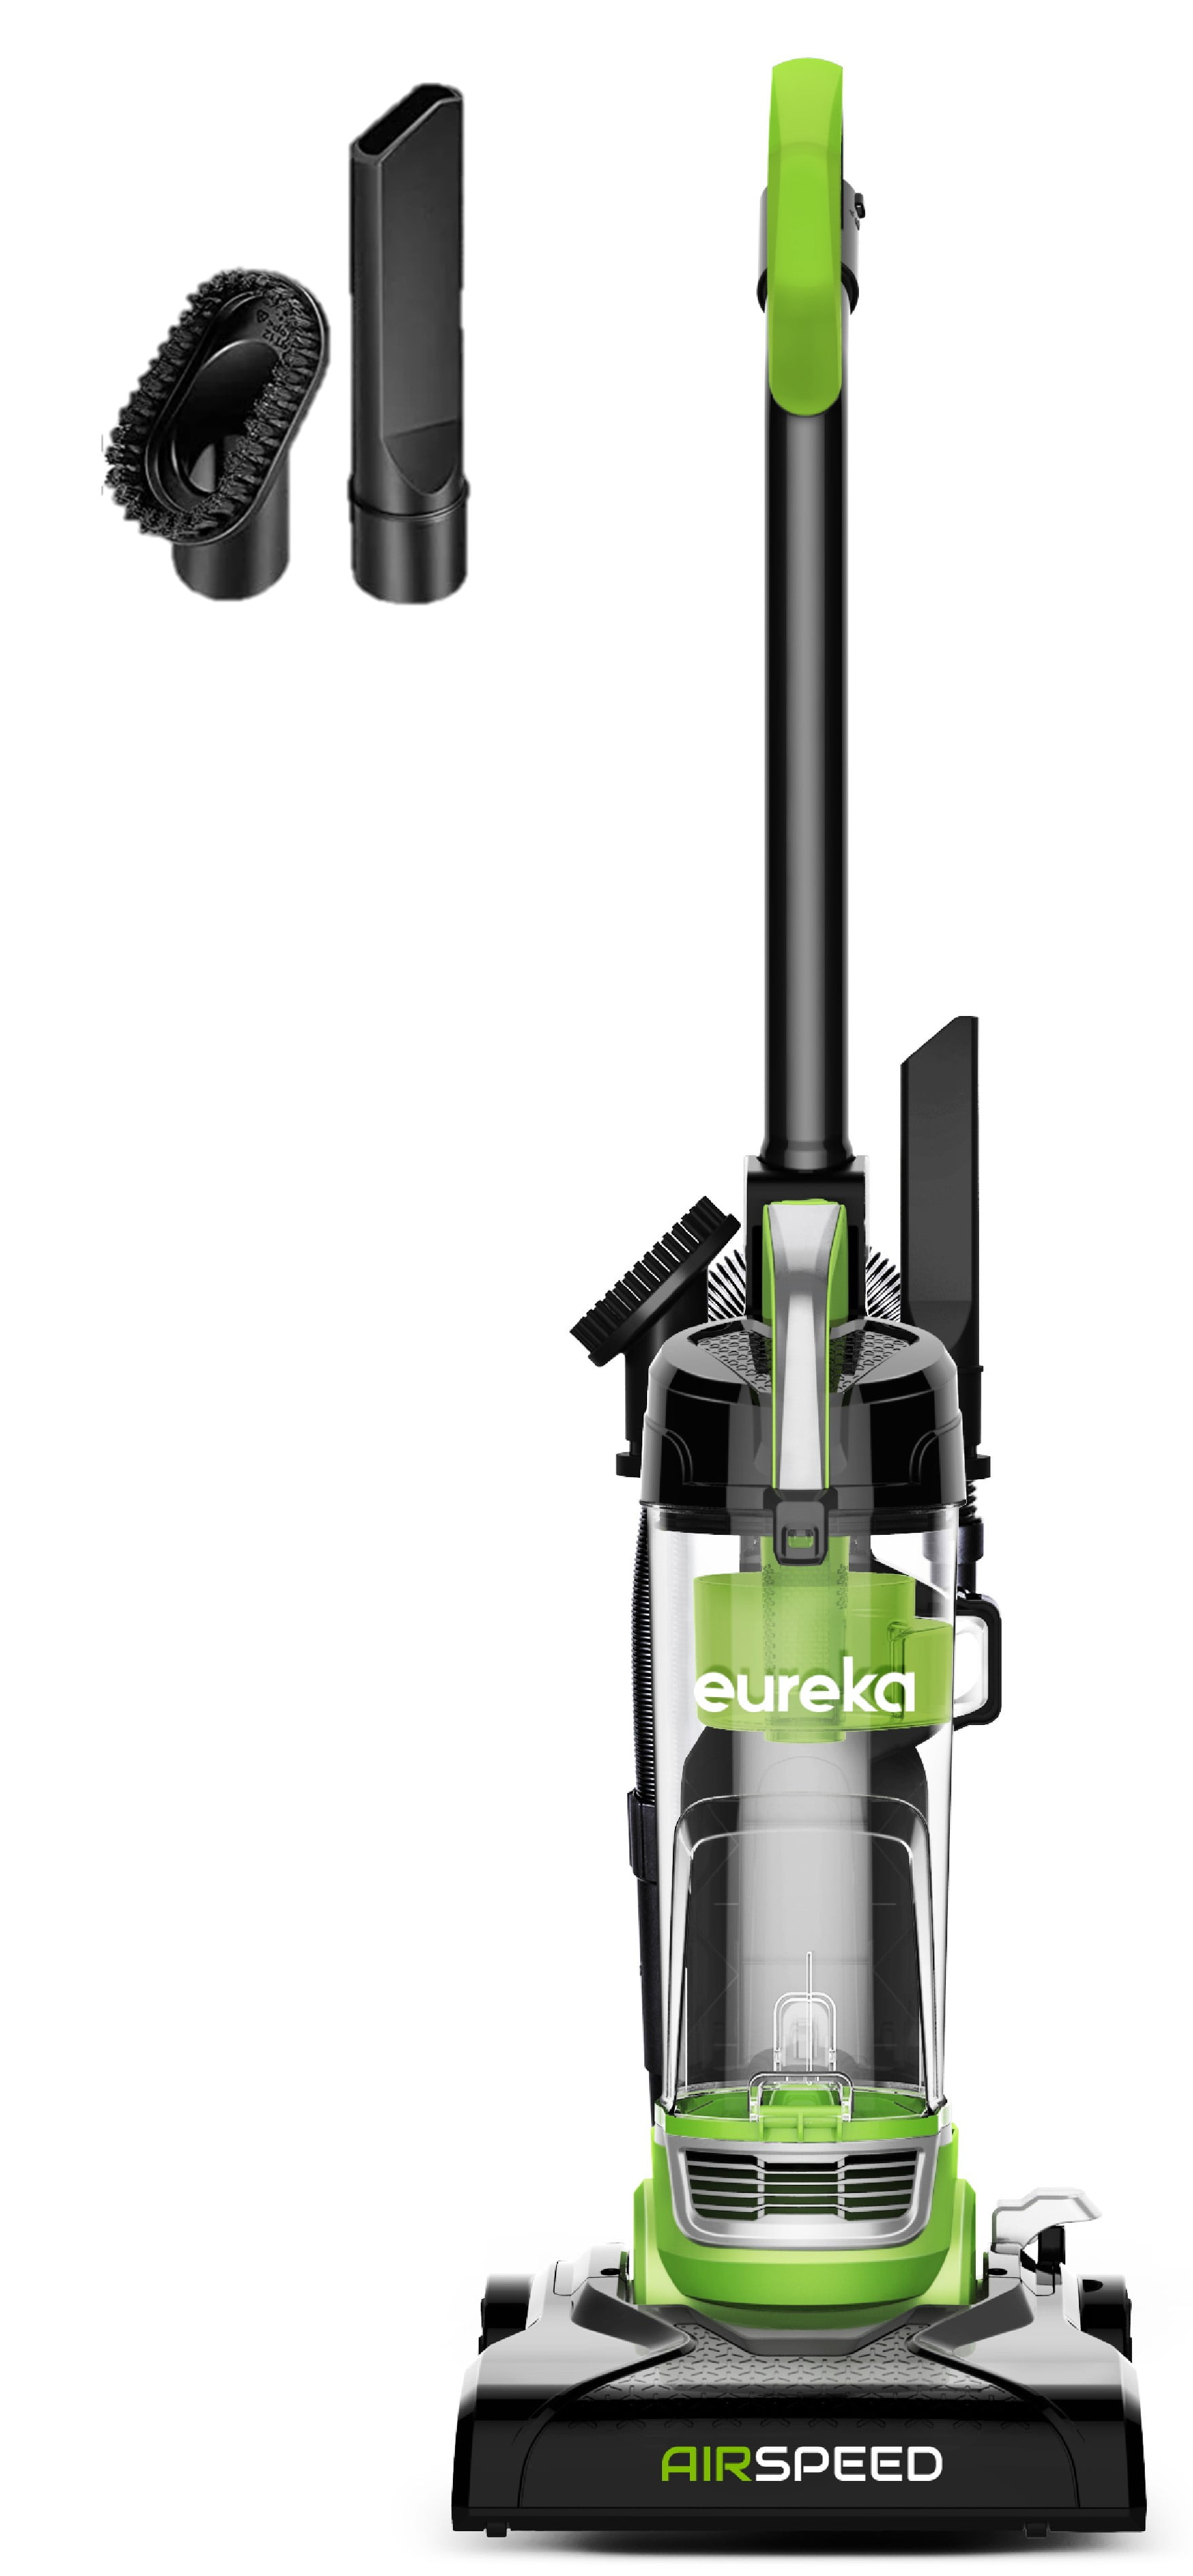 Eureka Airspeed Bagless Upright Vacuum Cleaner (Green & Black) $49.85 + Free Shipping